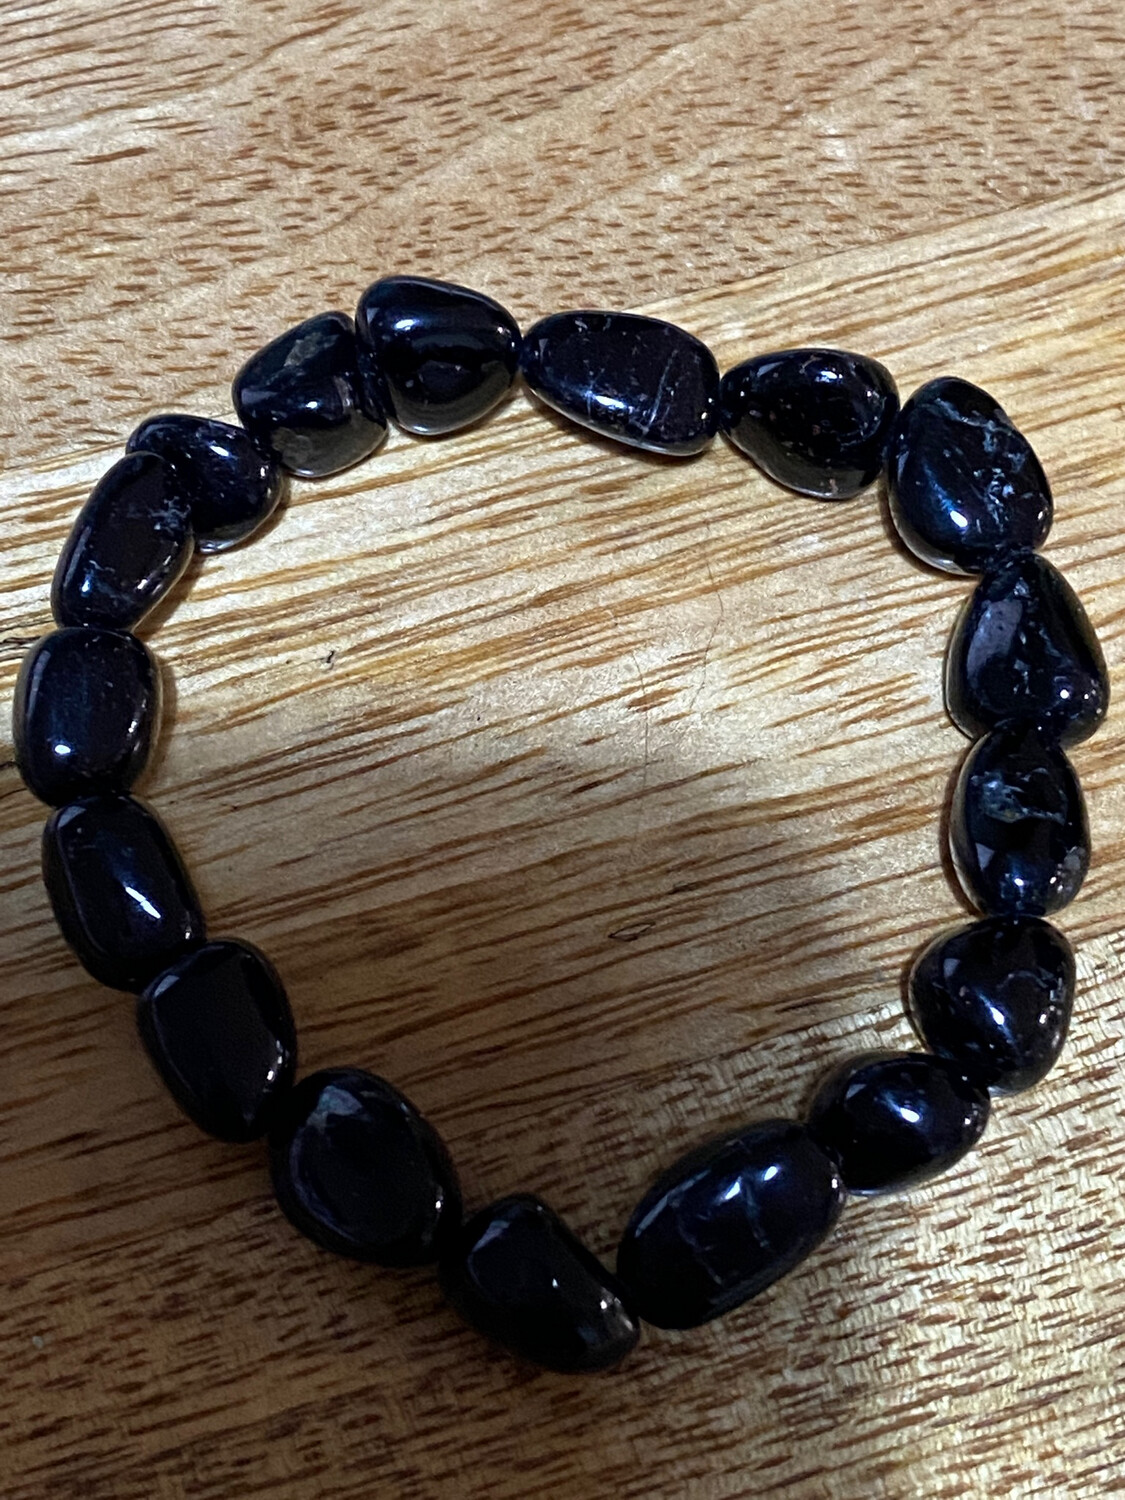 (Black) Tourmaline Bead Bracelet